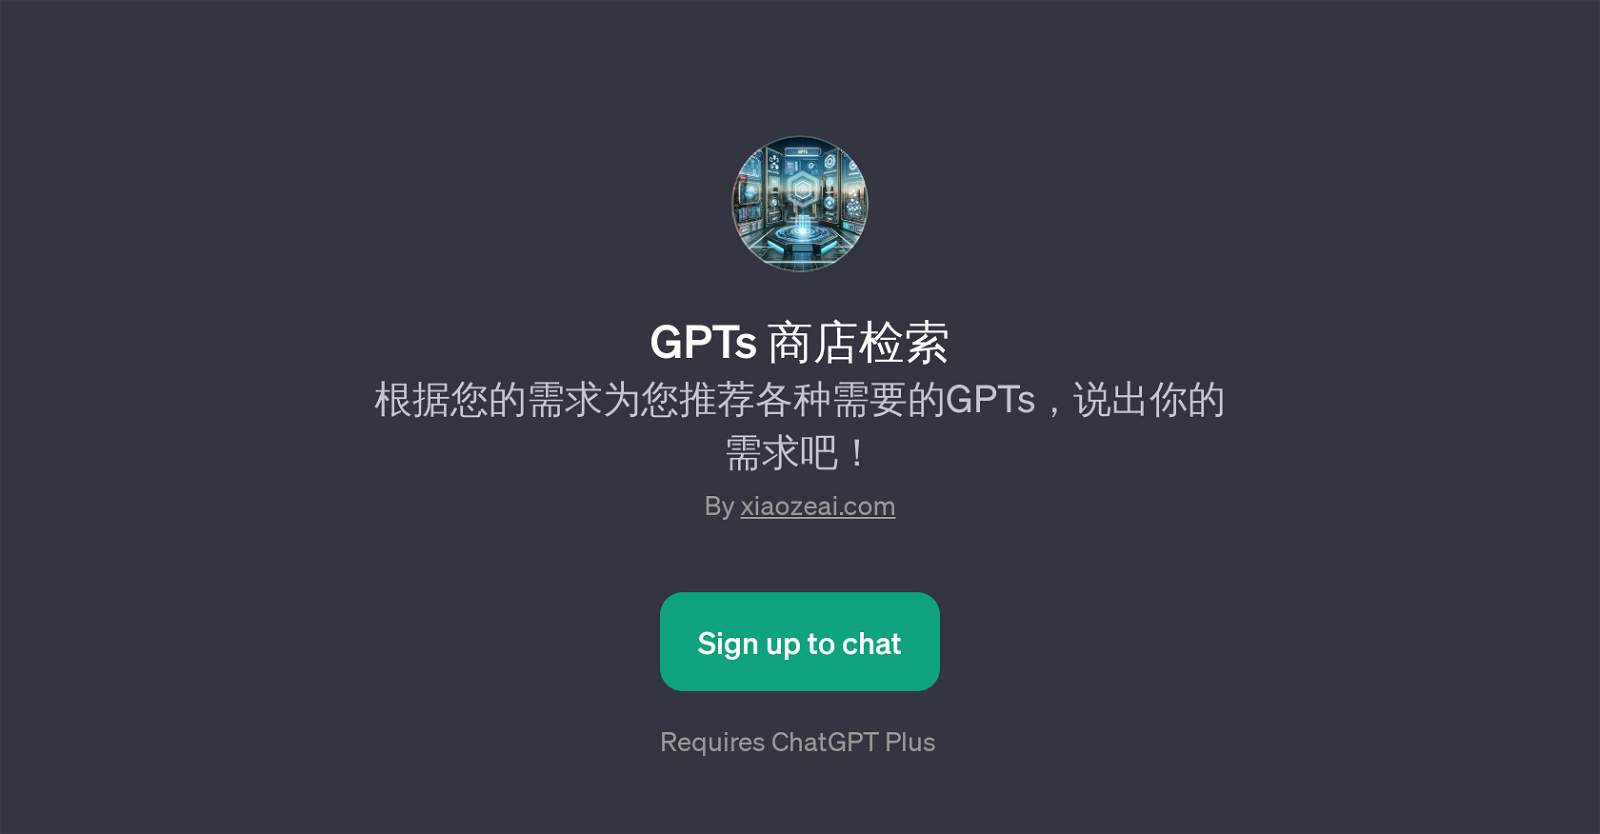 GPTs website